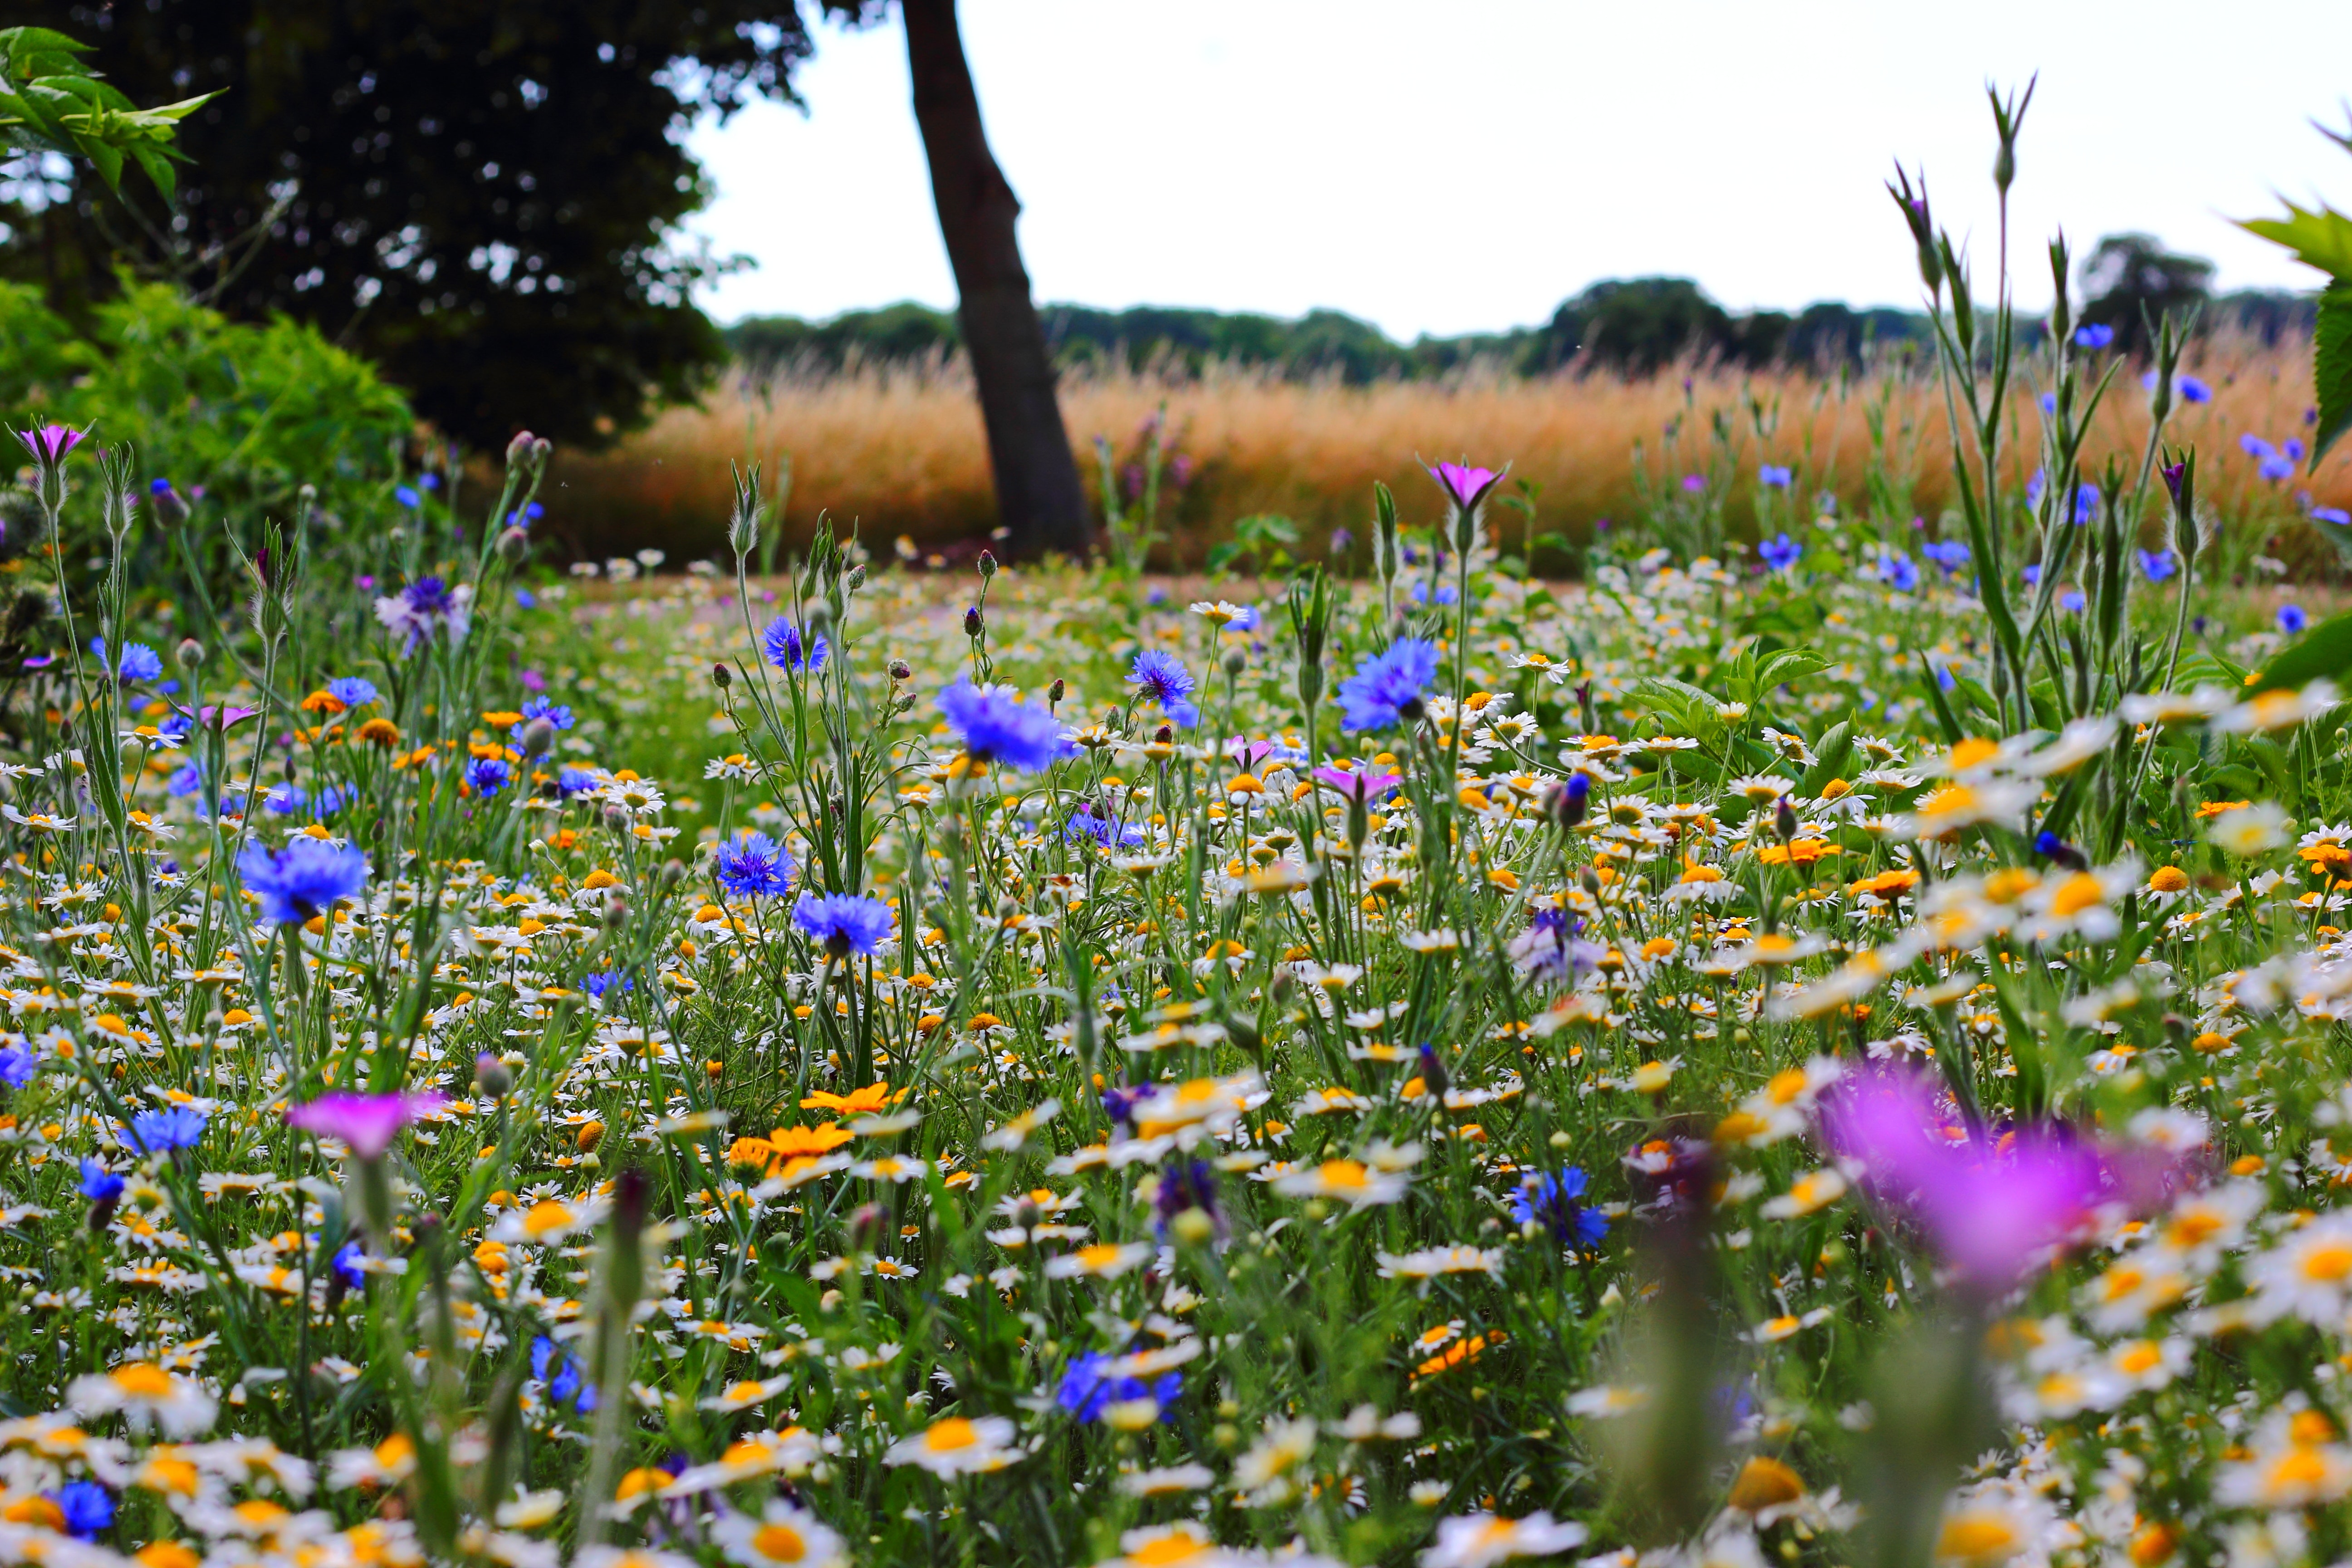 Free stock photos of meadow · Pexels